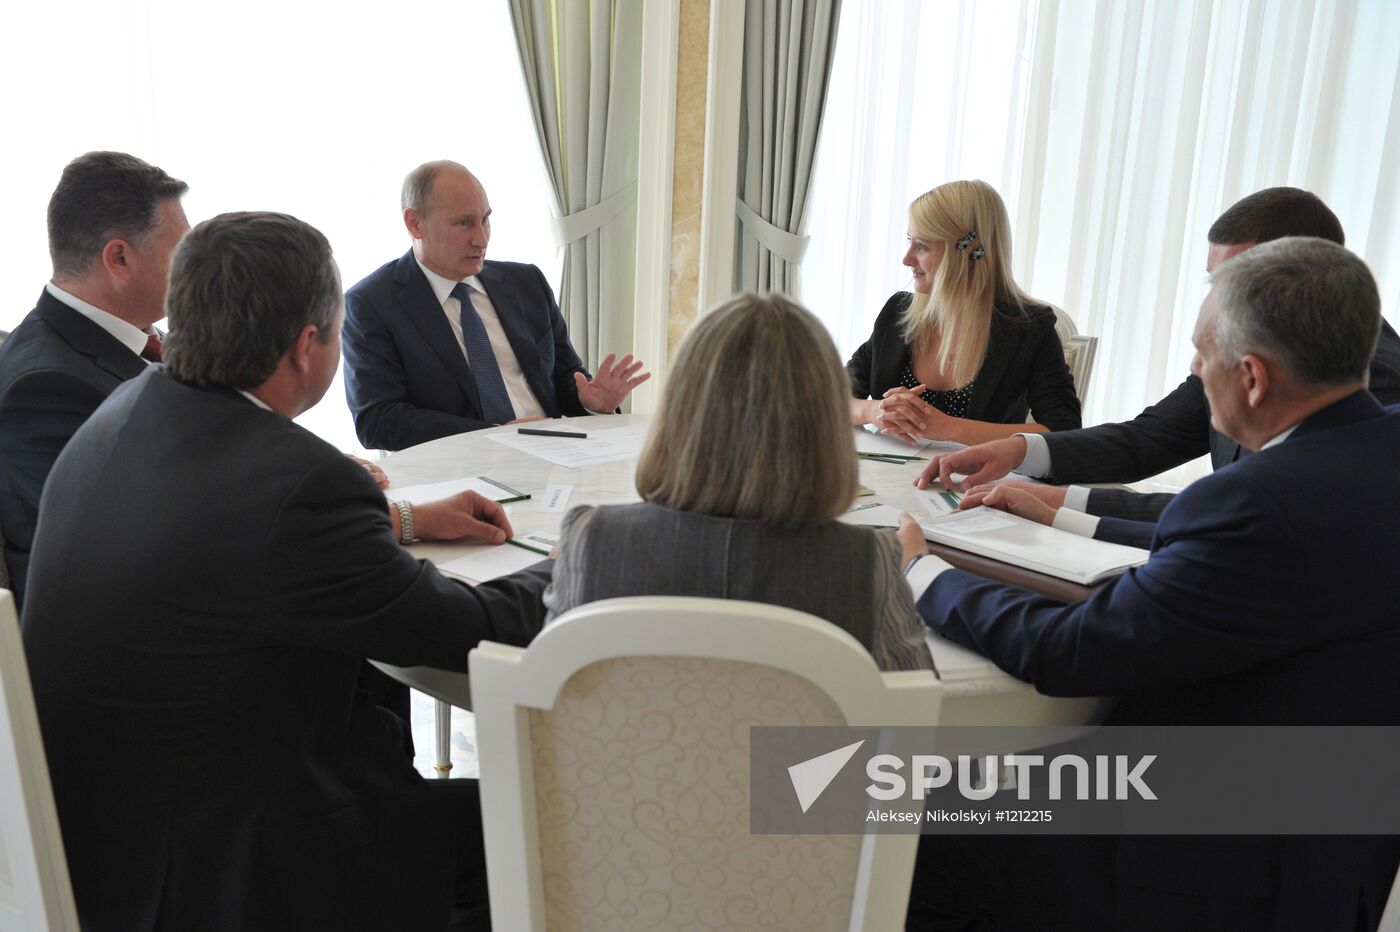 V.Putin meets with A.Khoroshavin and public representatives